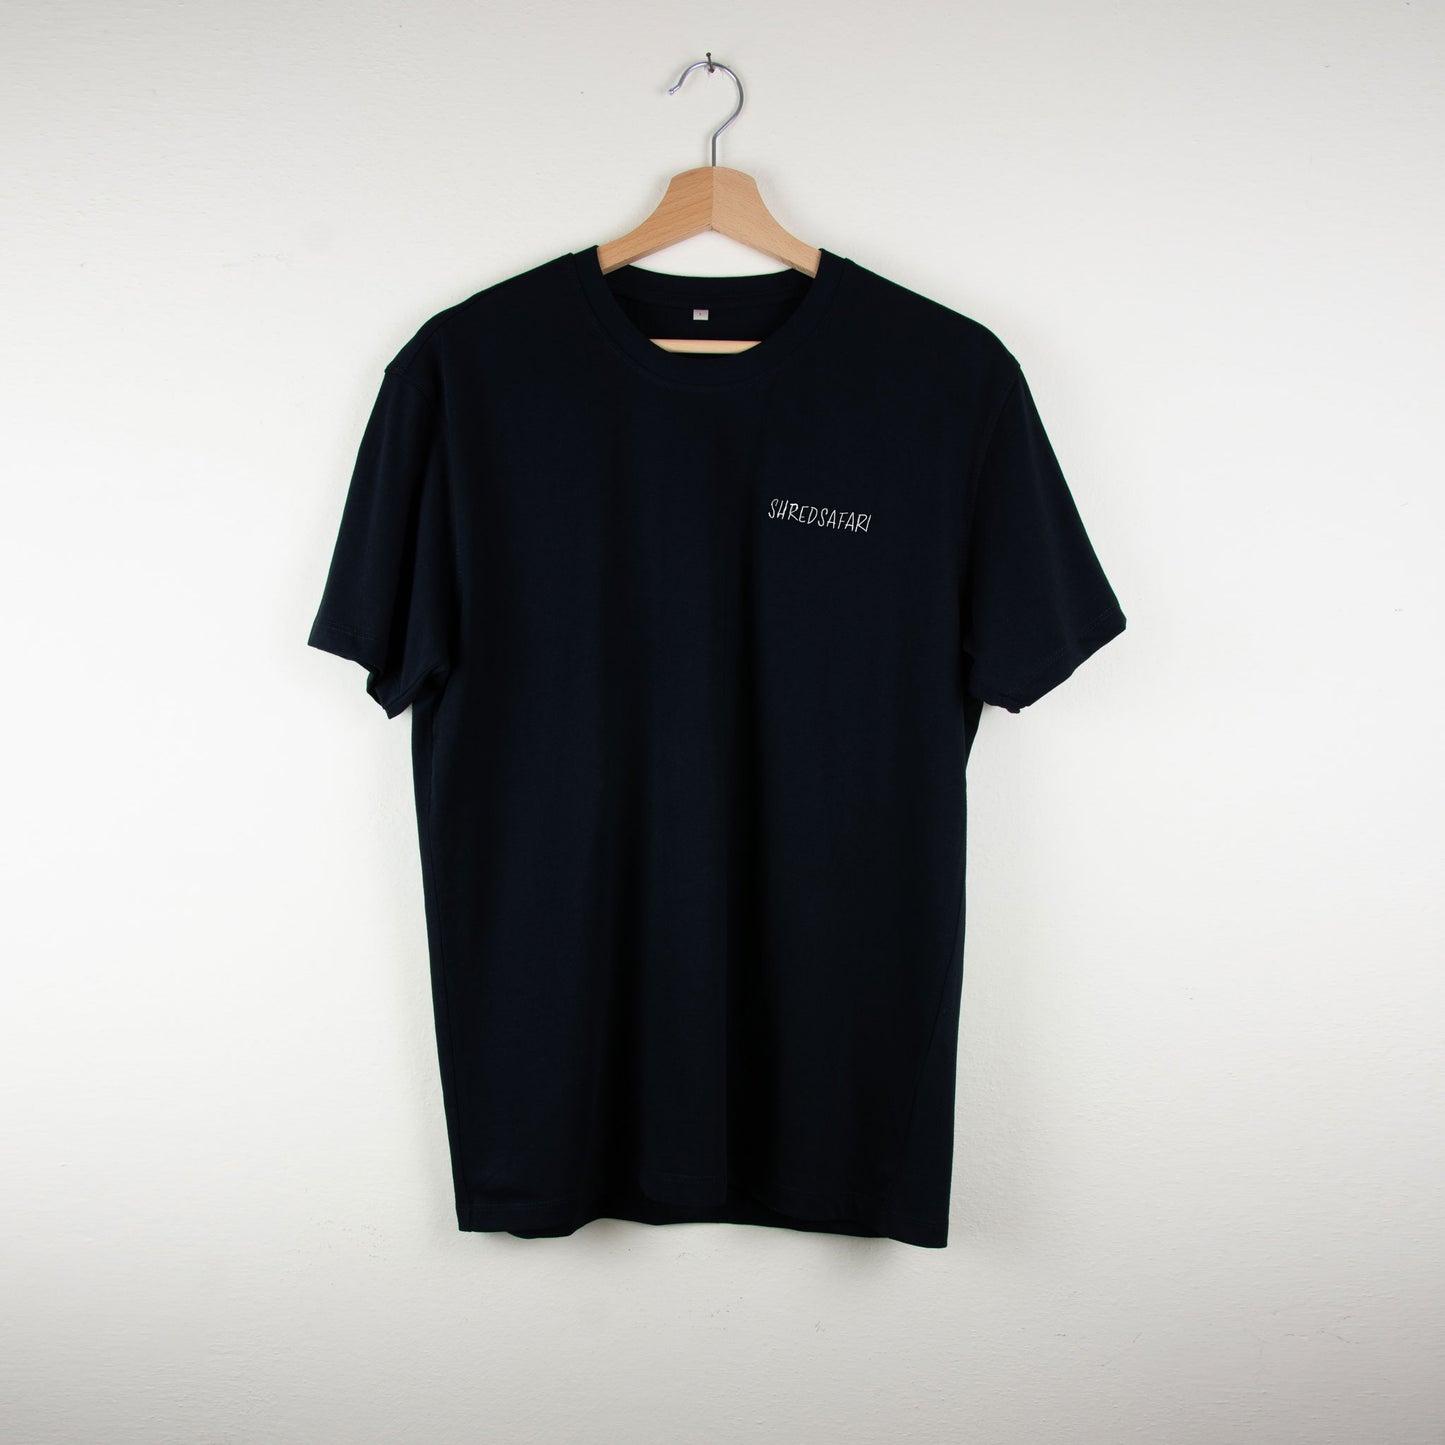 SHREDSAFARI Basic Contrast T-Shirt Unisex, Black